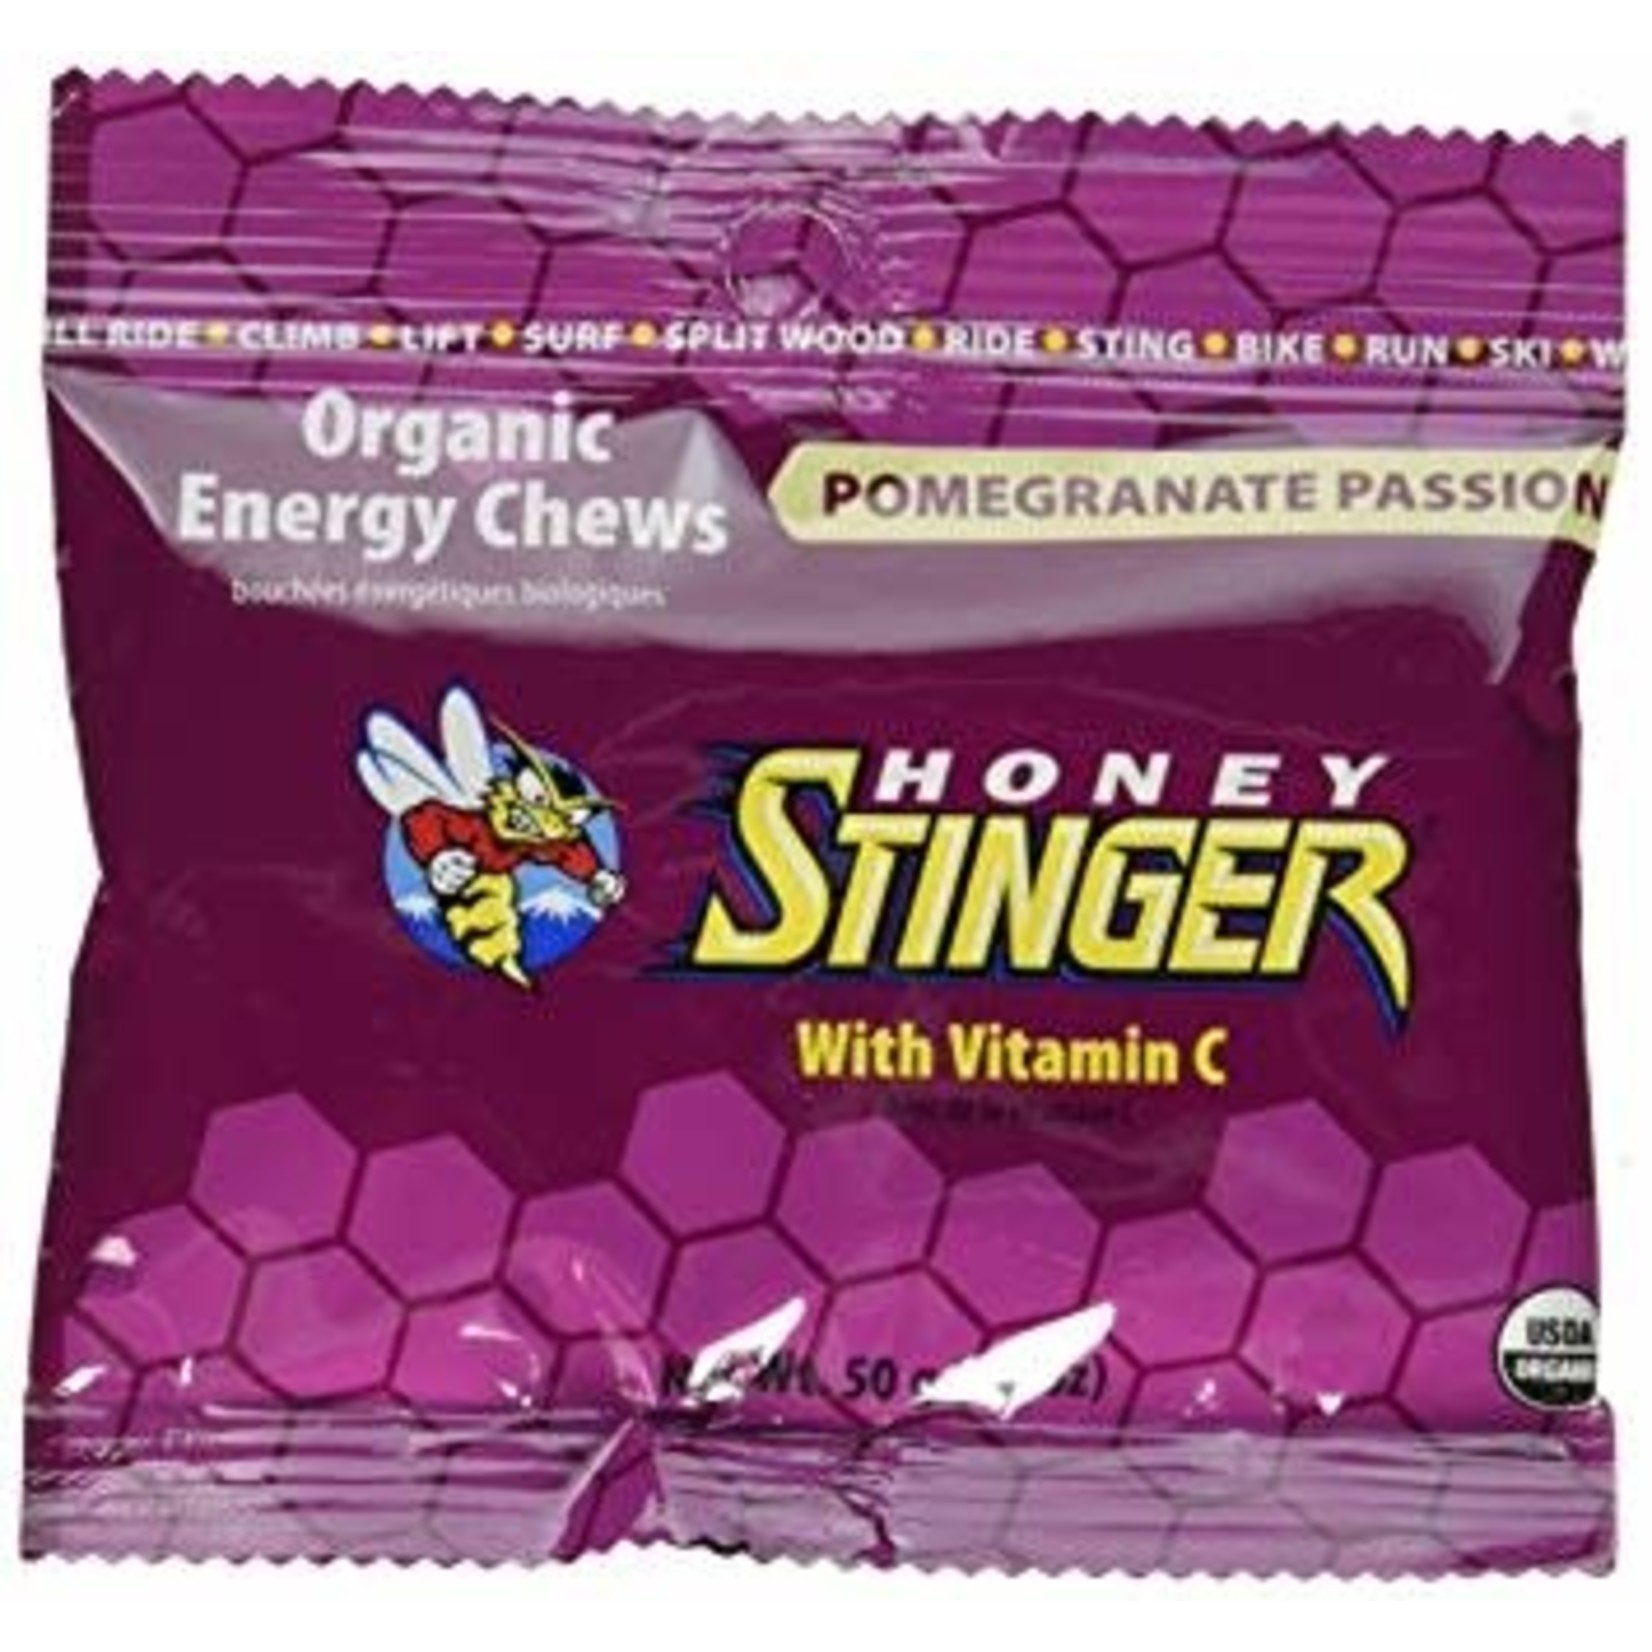 Honey Stinger, Organic Energy Chews 50g, Pomegranate single